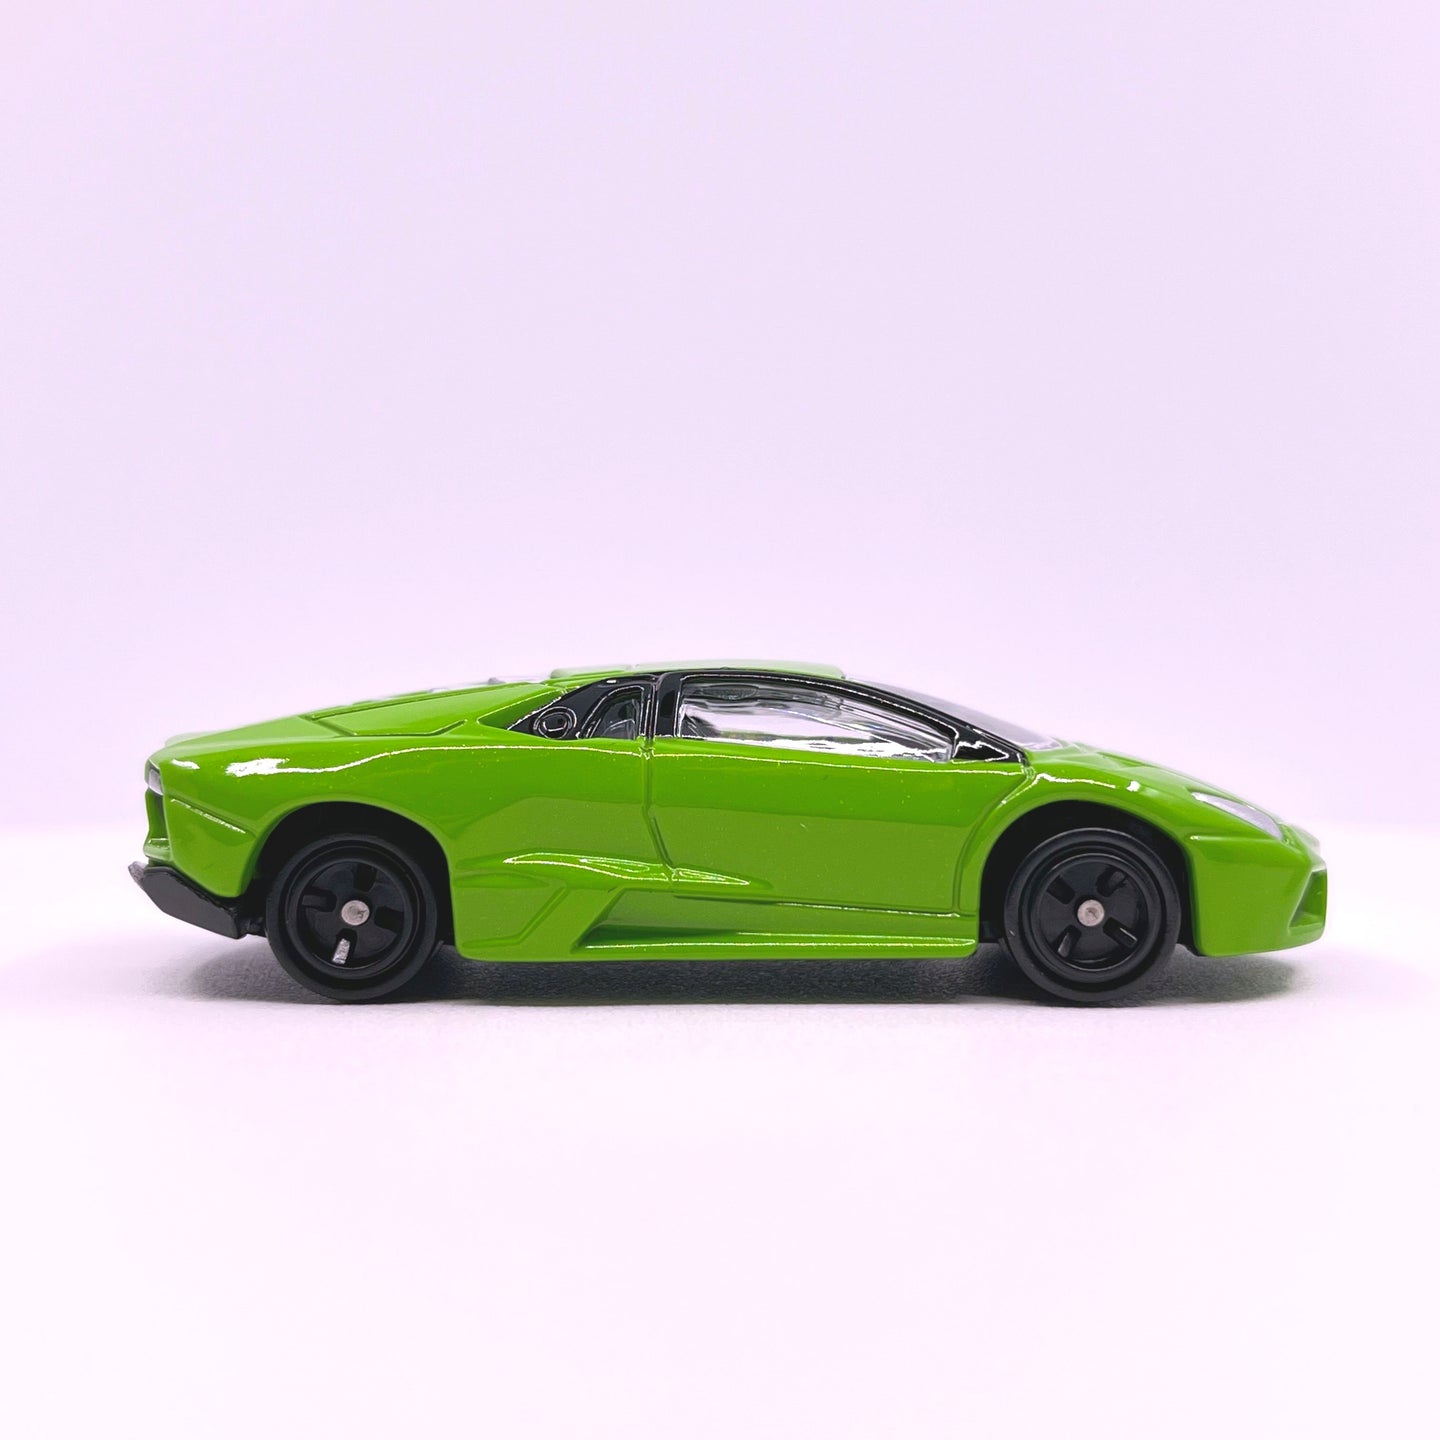 1:65 Lamborghini Reventon Alloy Tomica Diecast Car Model by Takara Tomy